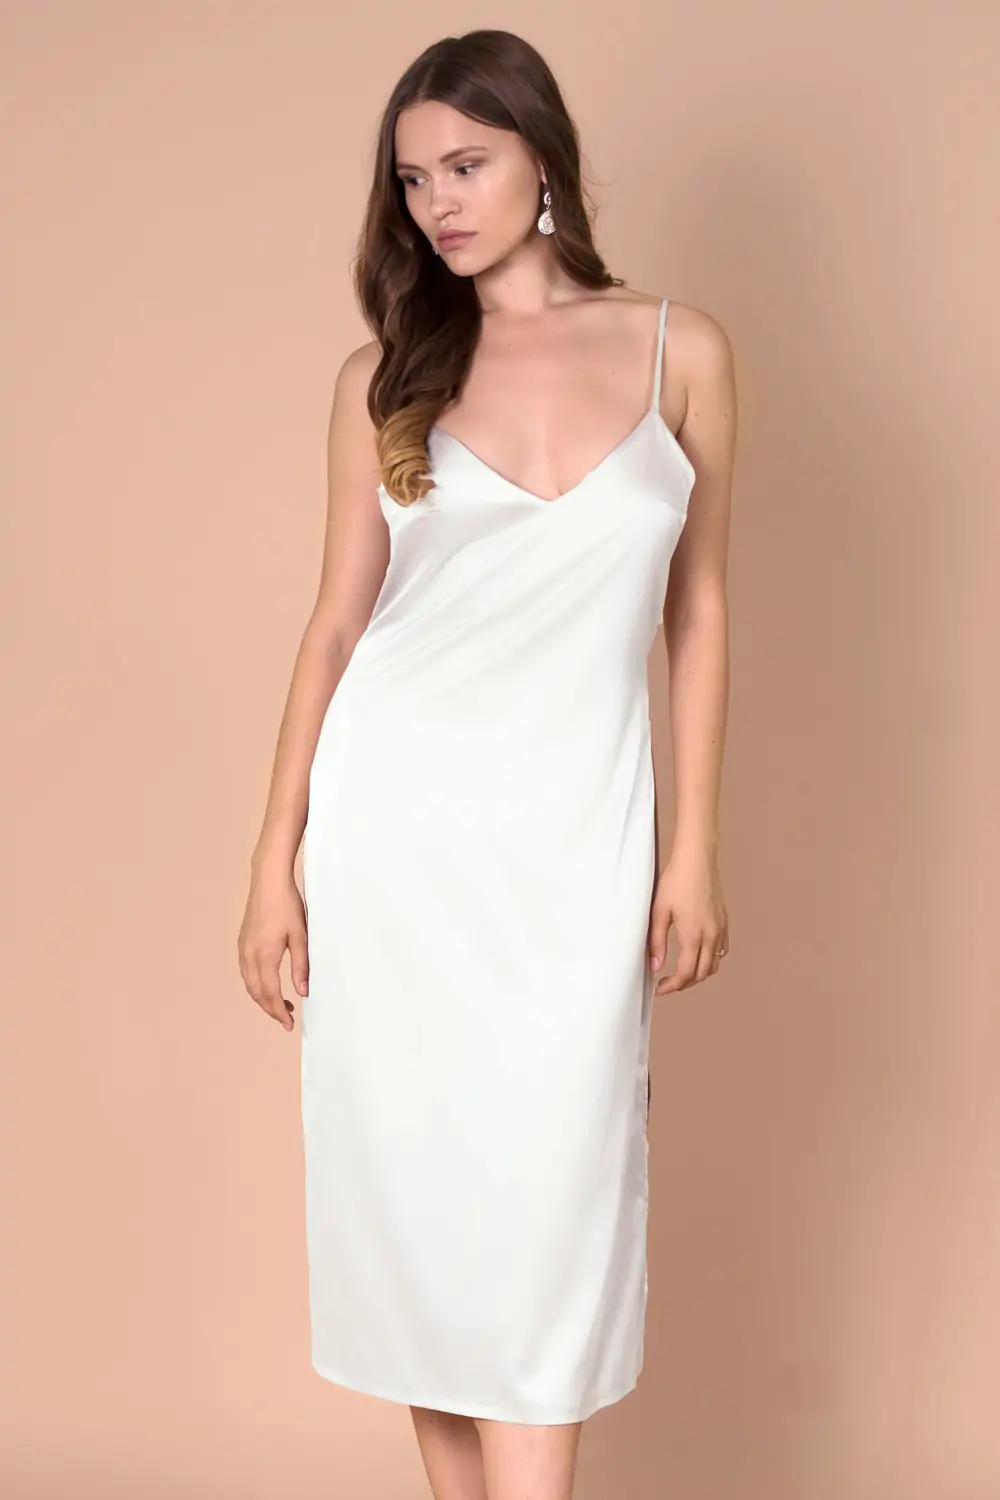 Buy Silk Nightgown - Sexy Long Nighty ...